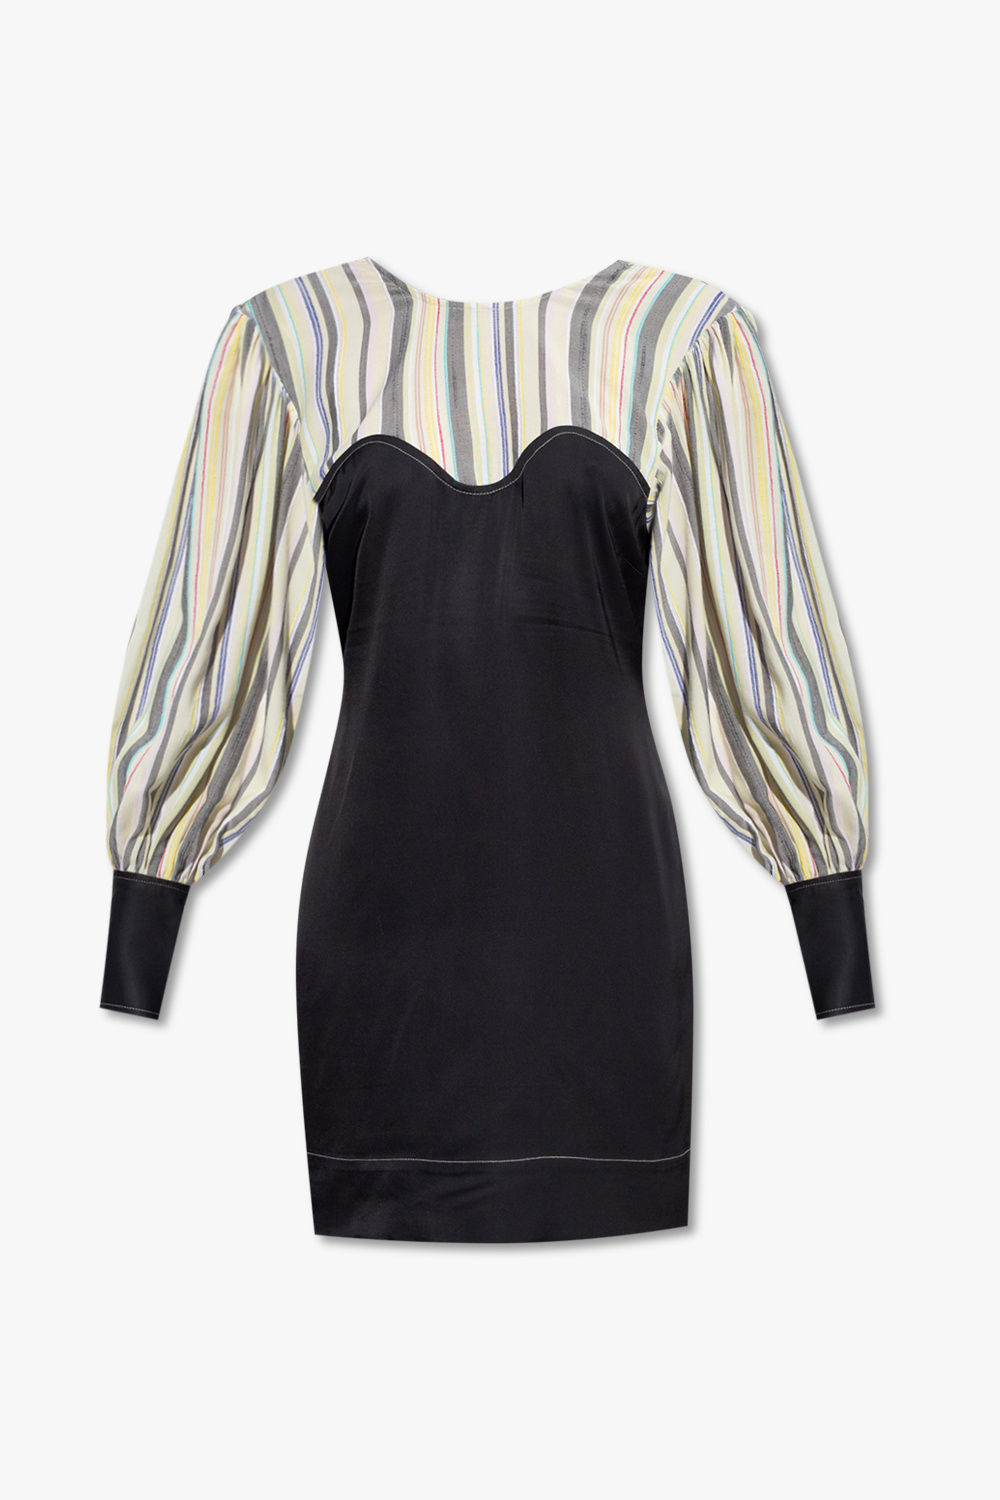 Wedgie Icon slim jeans - IetpShops Italy - Black Striped dress Ganni